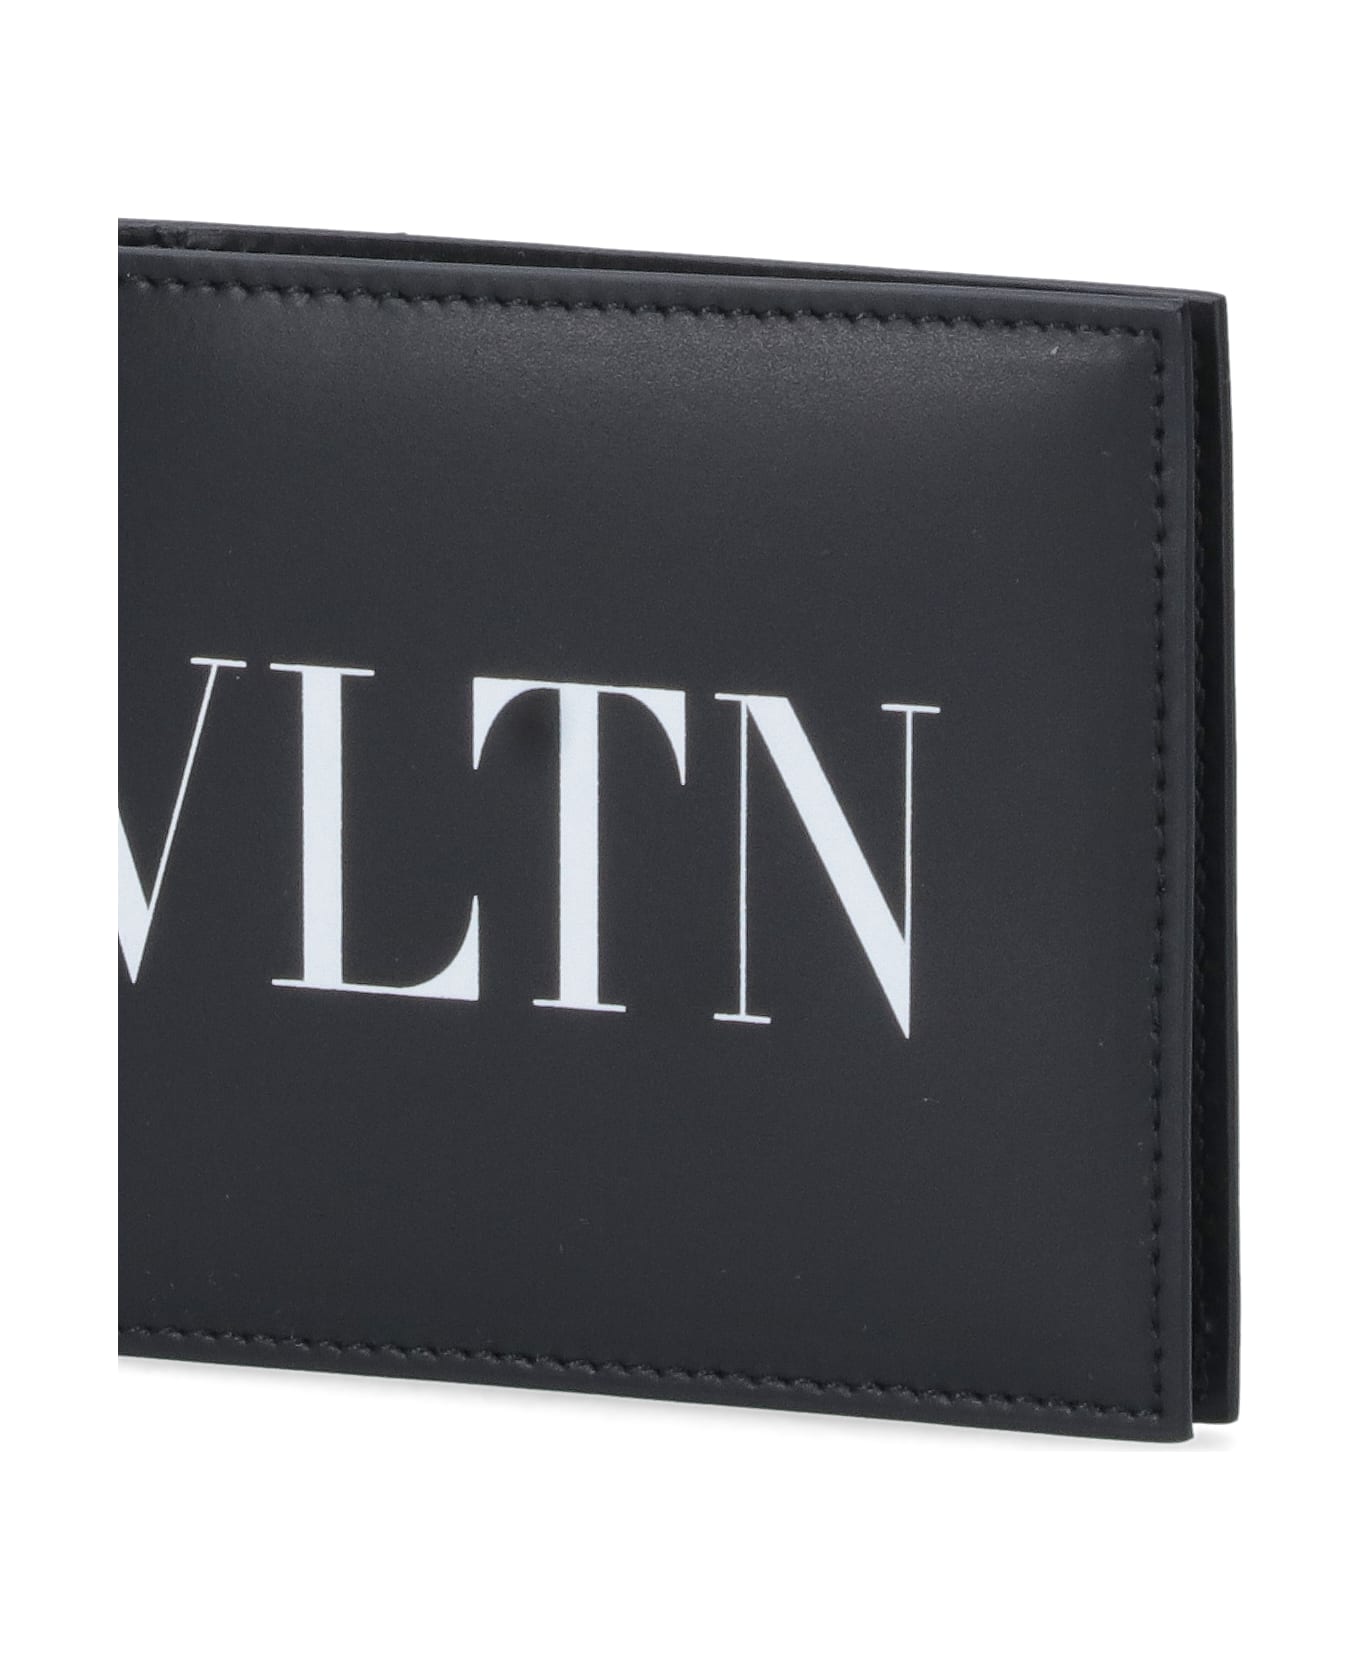 Valentino Garavani Vltn Wallet - Black   財布